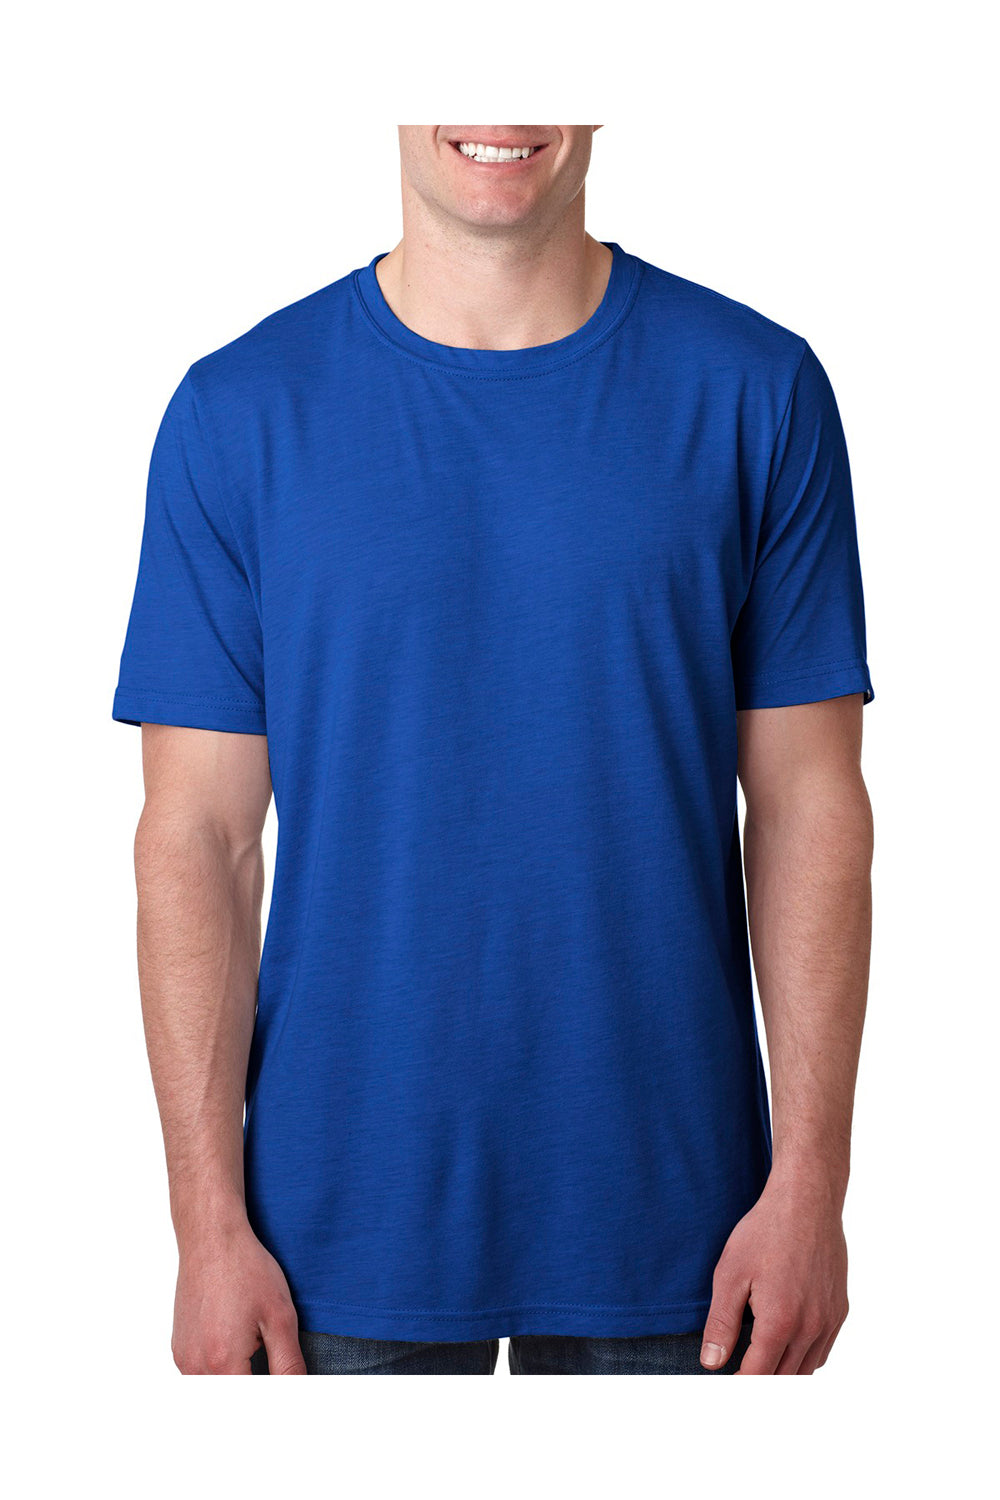 Next Level 6200 Mens Jersey Short Sleeve Crewneck T-Shirt Royal Blue Front